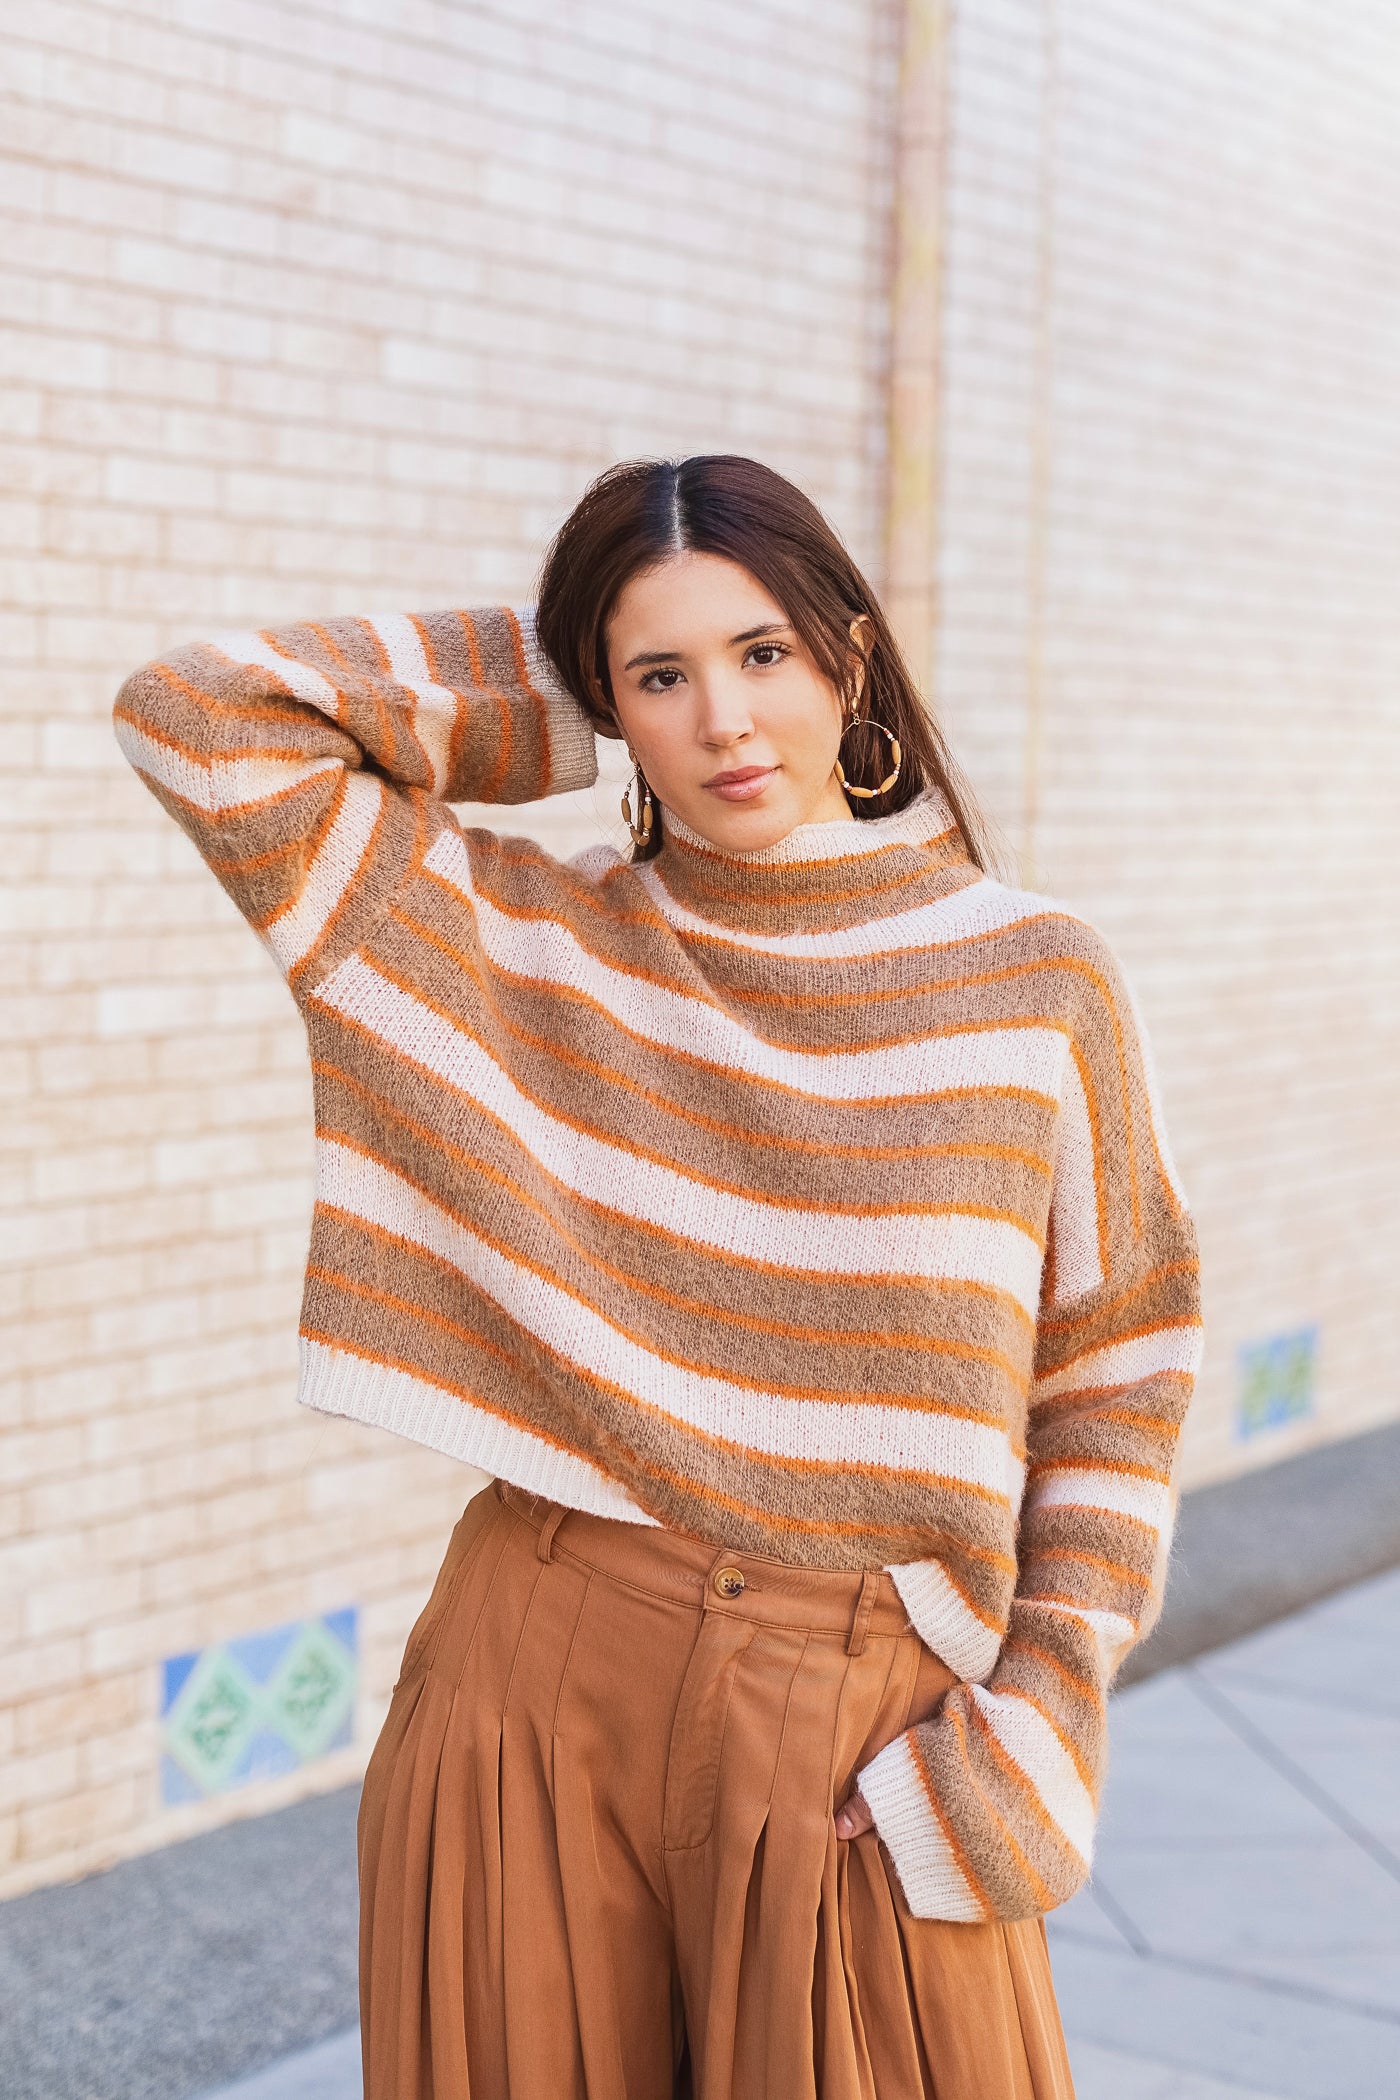 The Carlisle Mocha Striped Sweater